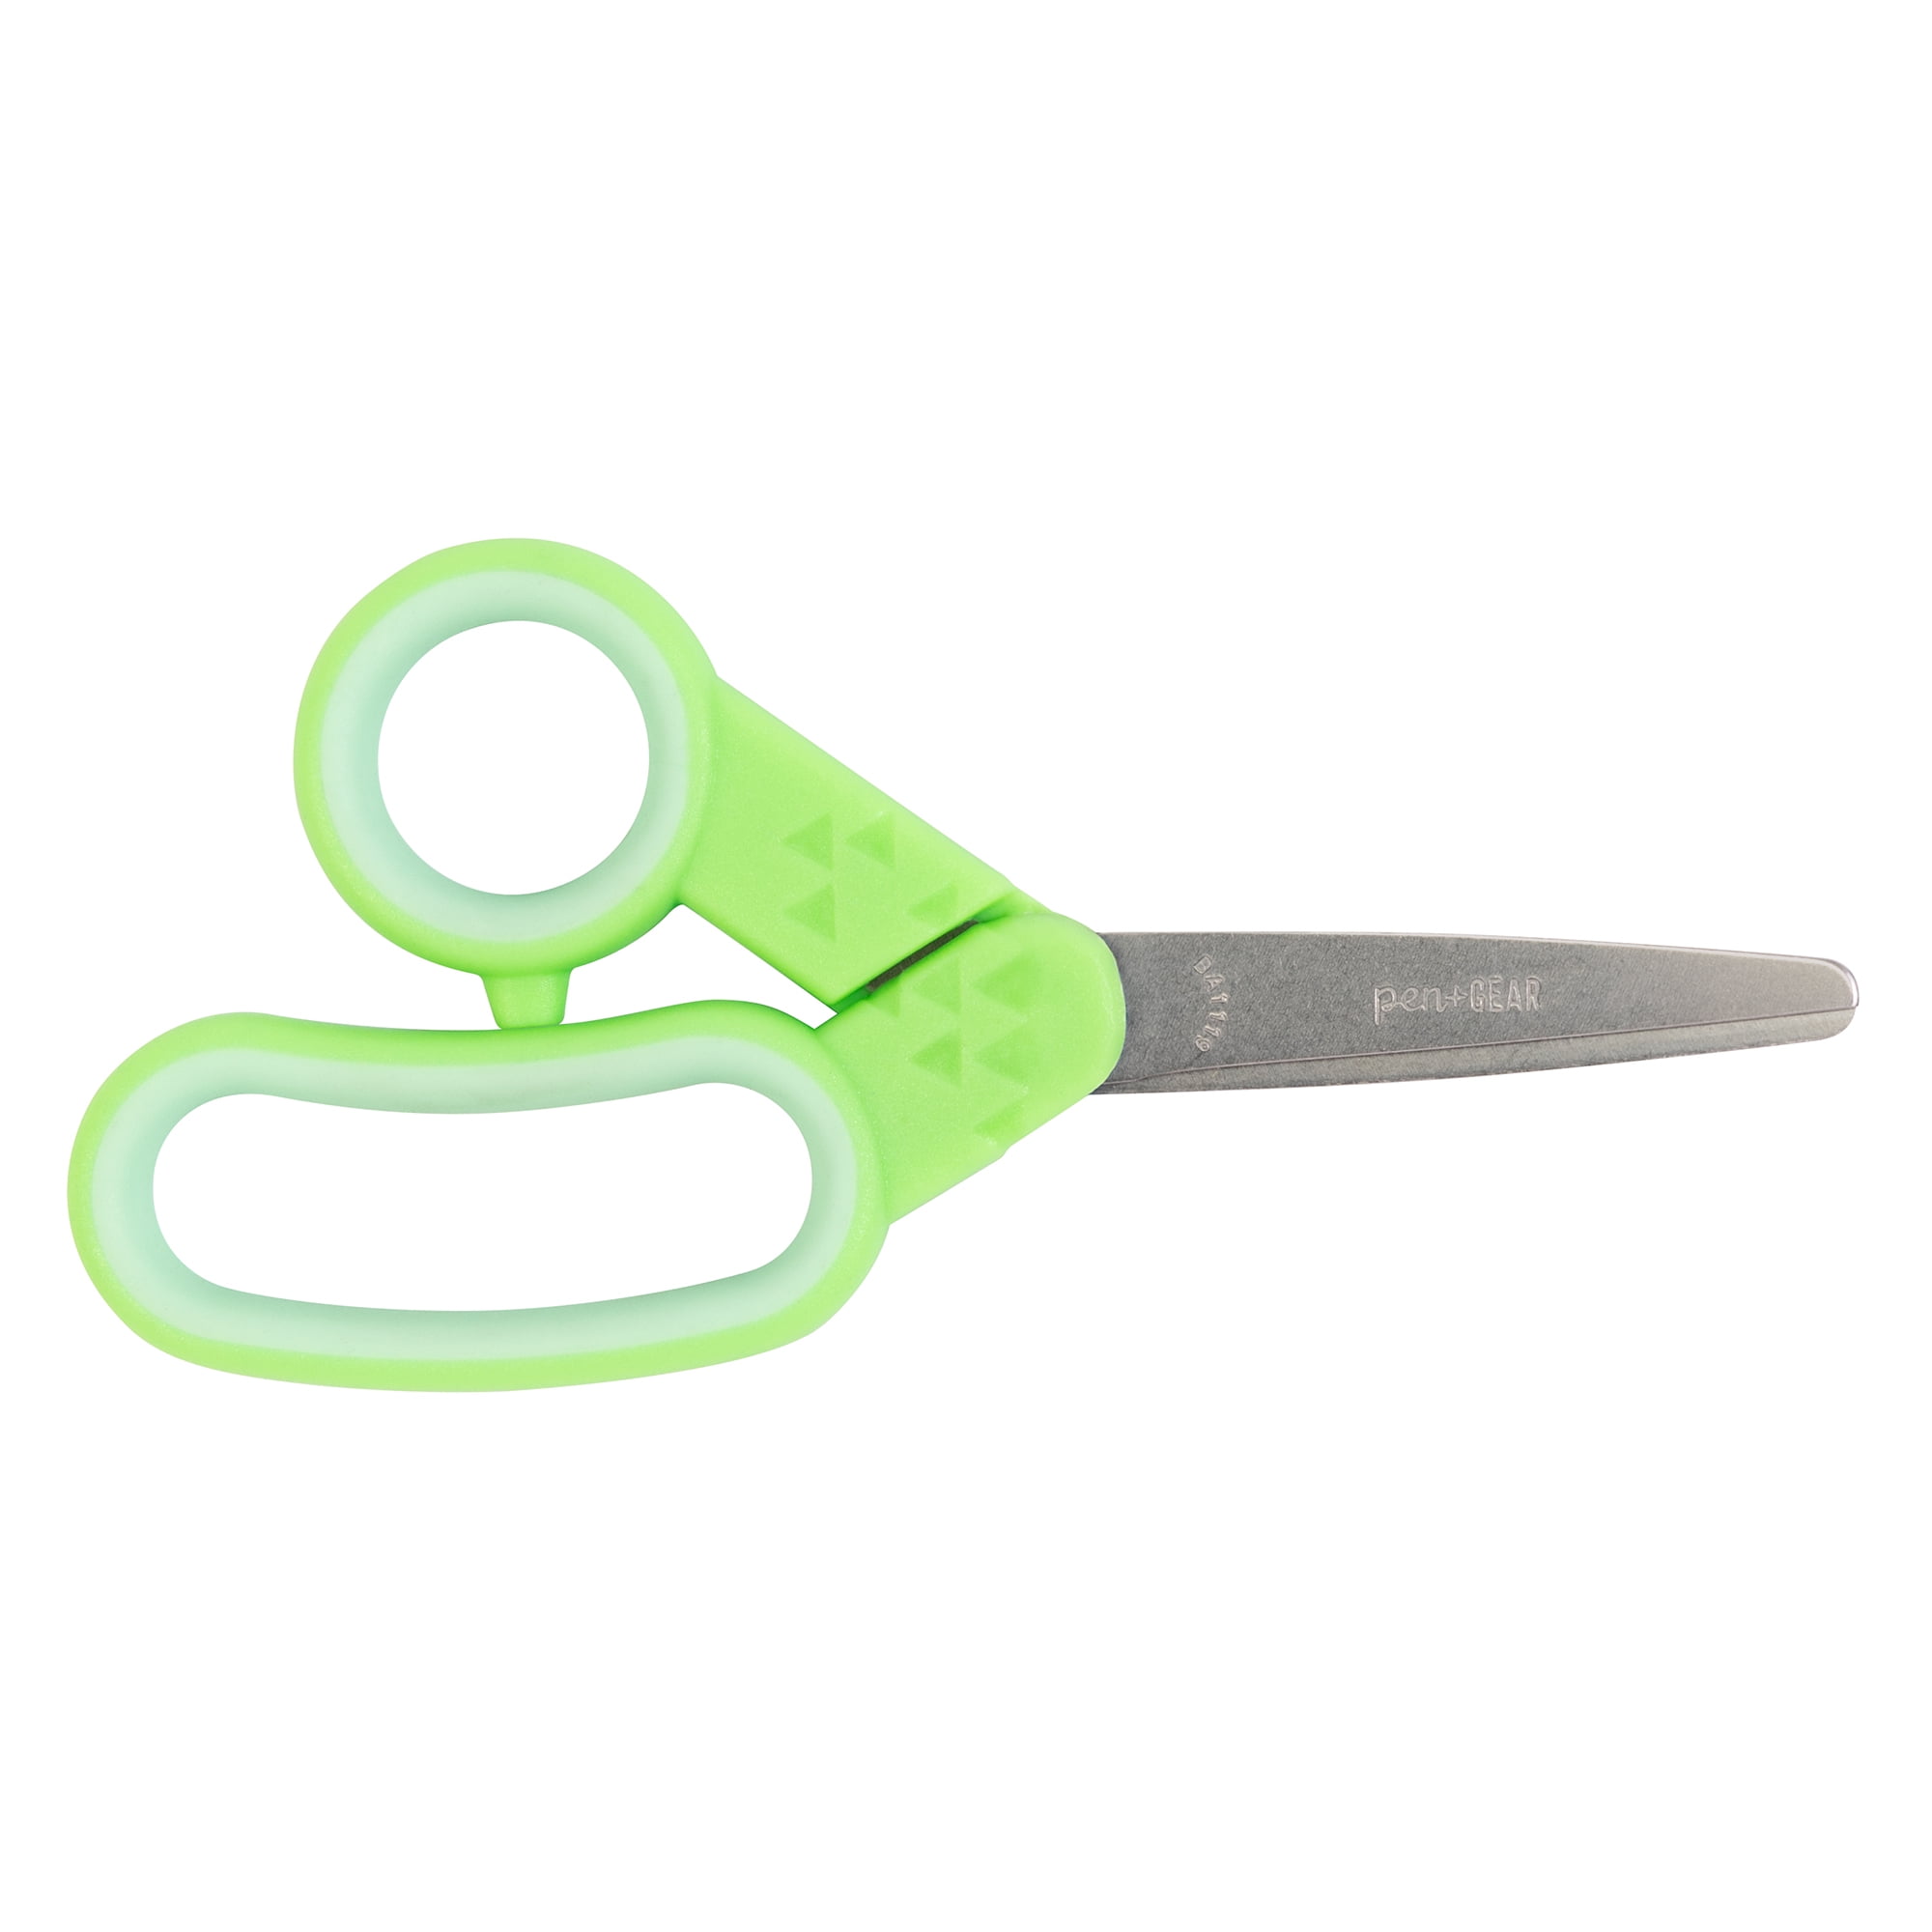 Stanley Minnow™ 5 Kids Scissors, Blunt Tip, 8-Pack